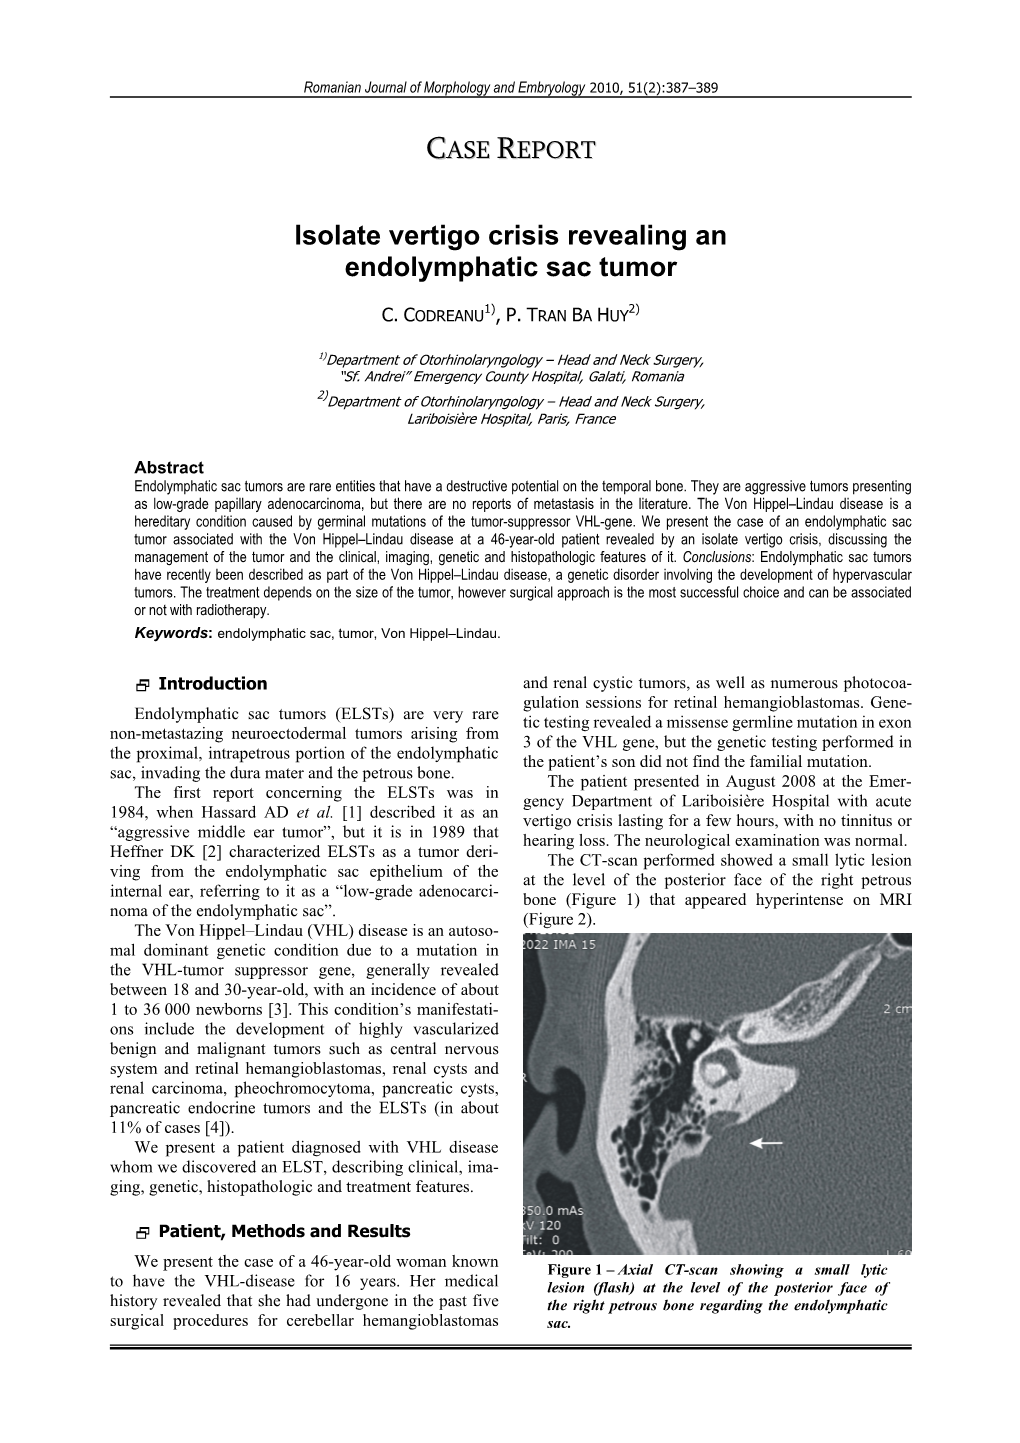 Download PDF Isolate Vertigo Crisis Revealing an Endolymphatic Sac